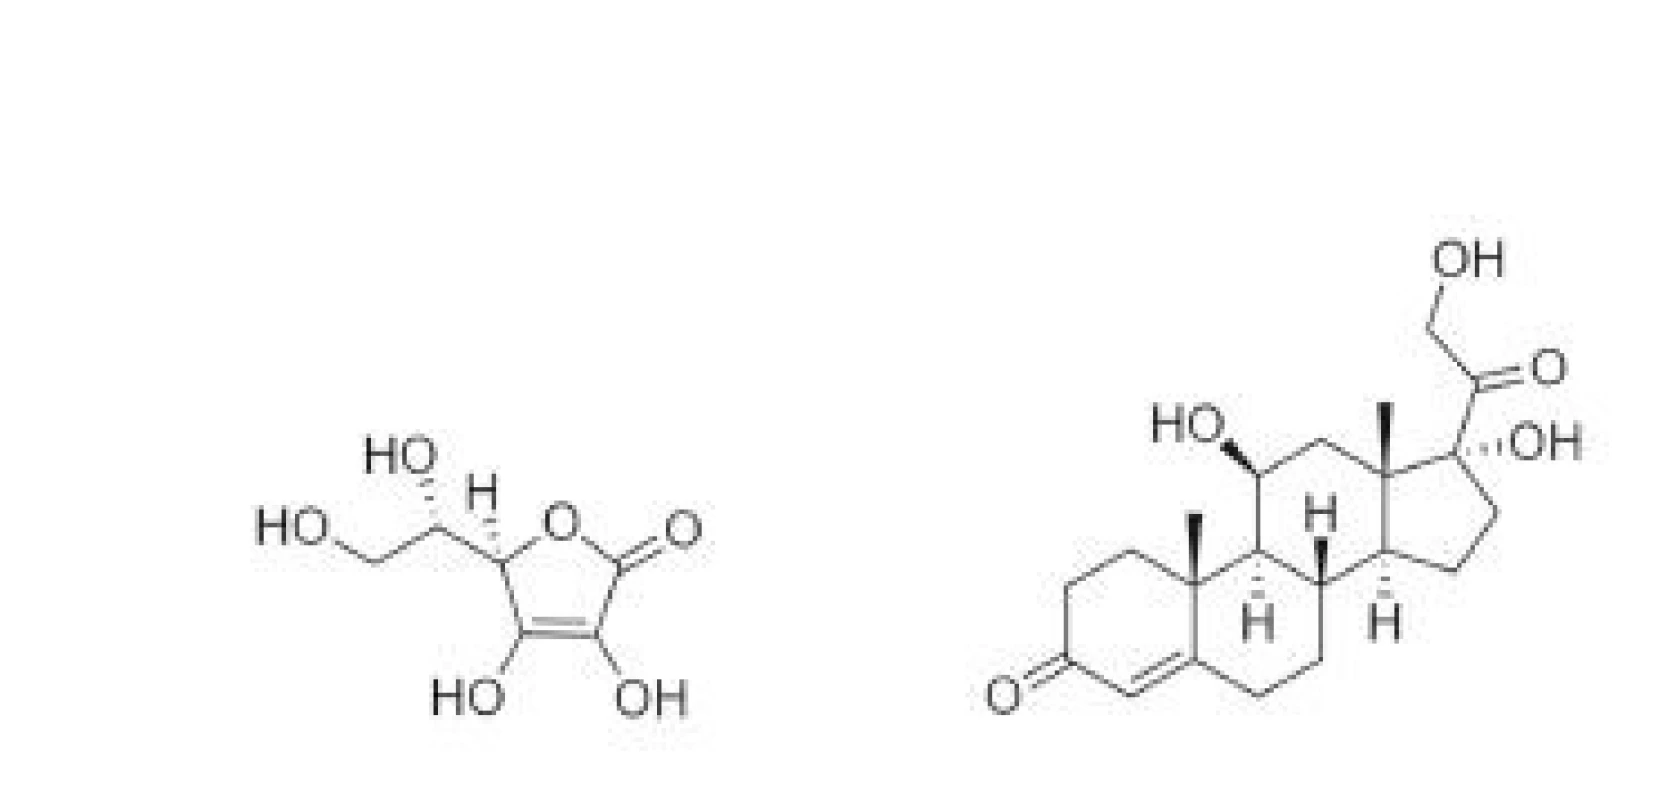 Struktura vitaminu C a kortizolu. Vlevo strukturní
chemický vzorec vitaminu C (kyseliny L-askorbové), vpravo
kortizolu.